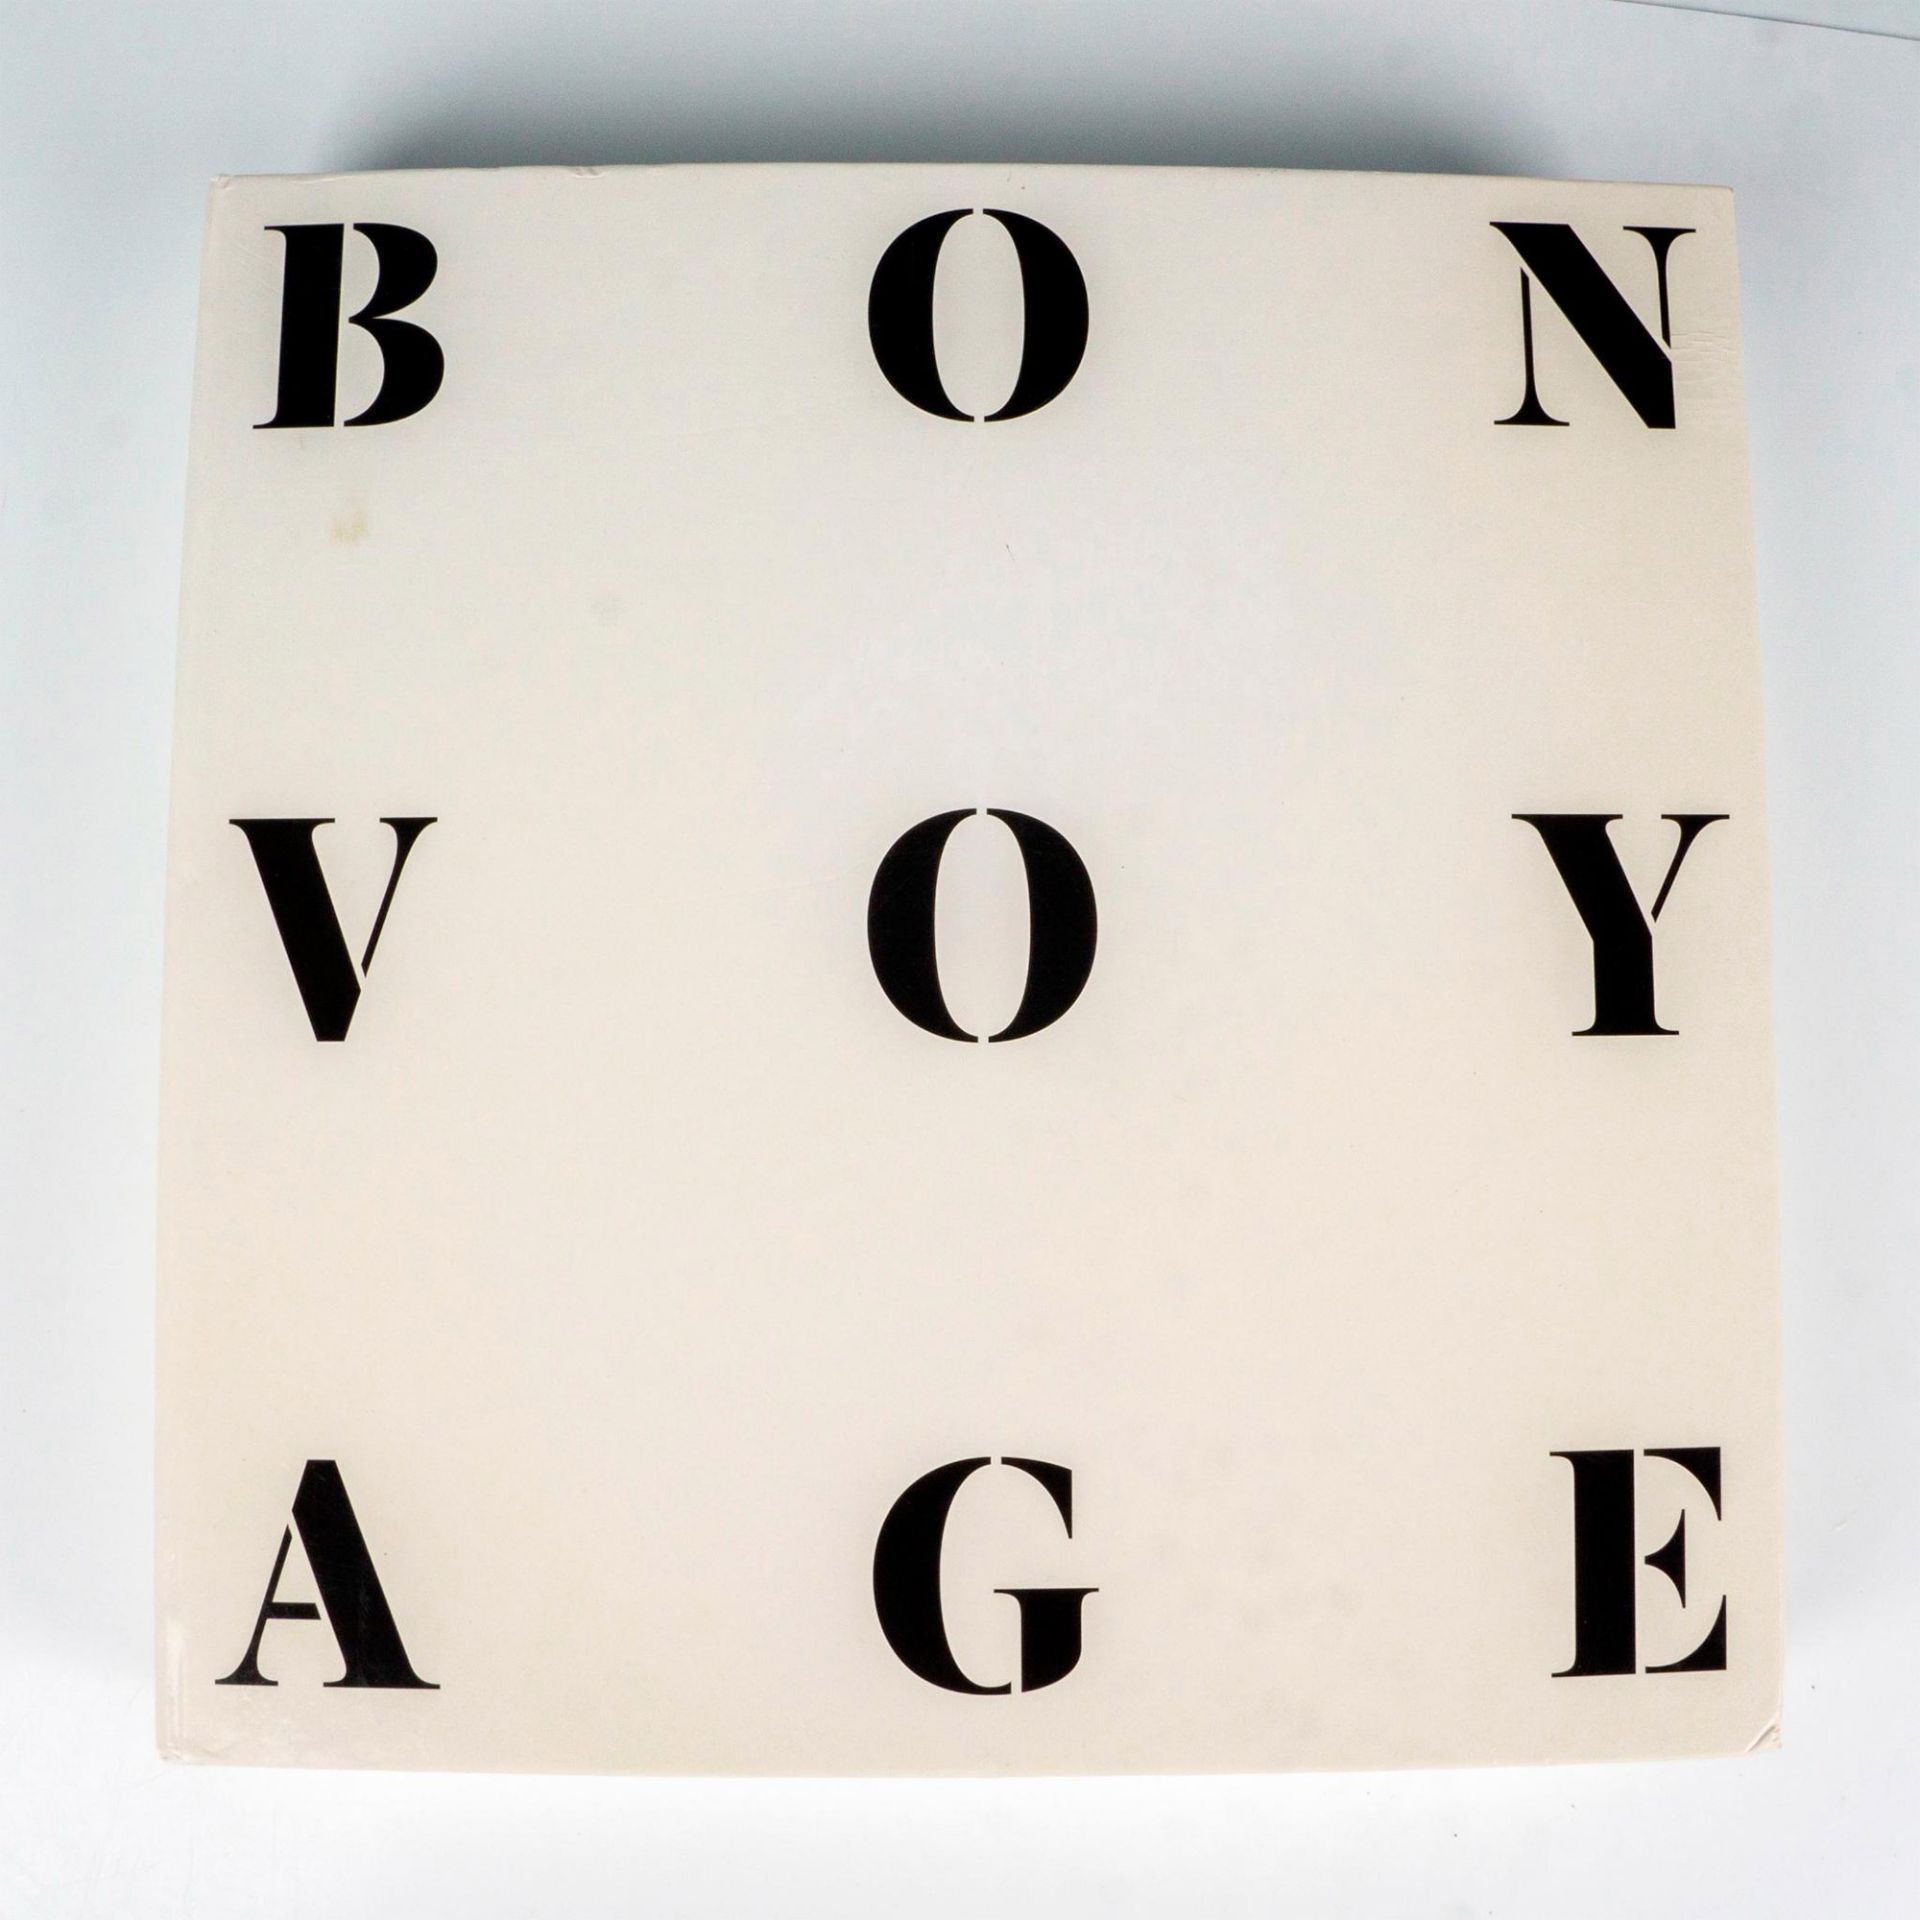 Bon Voyage by Jetsetter, Book by Nikki Ridgway